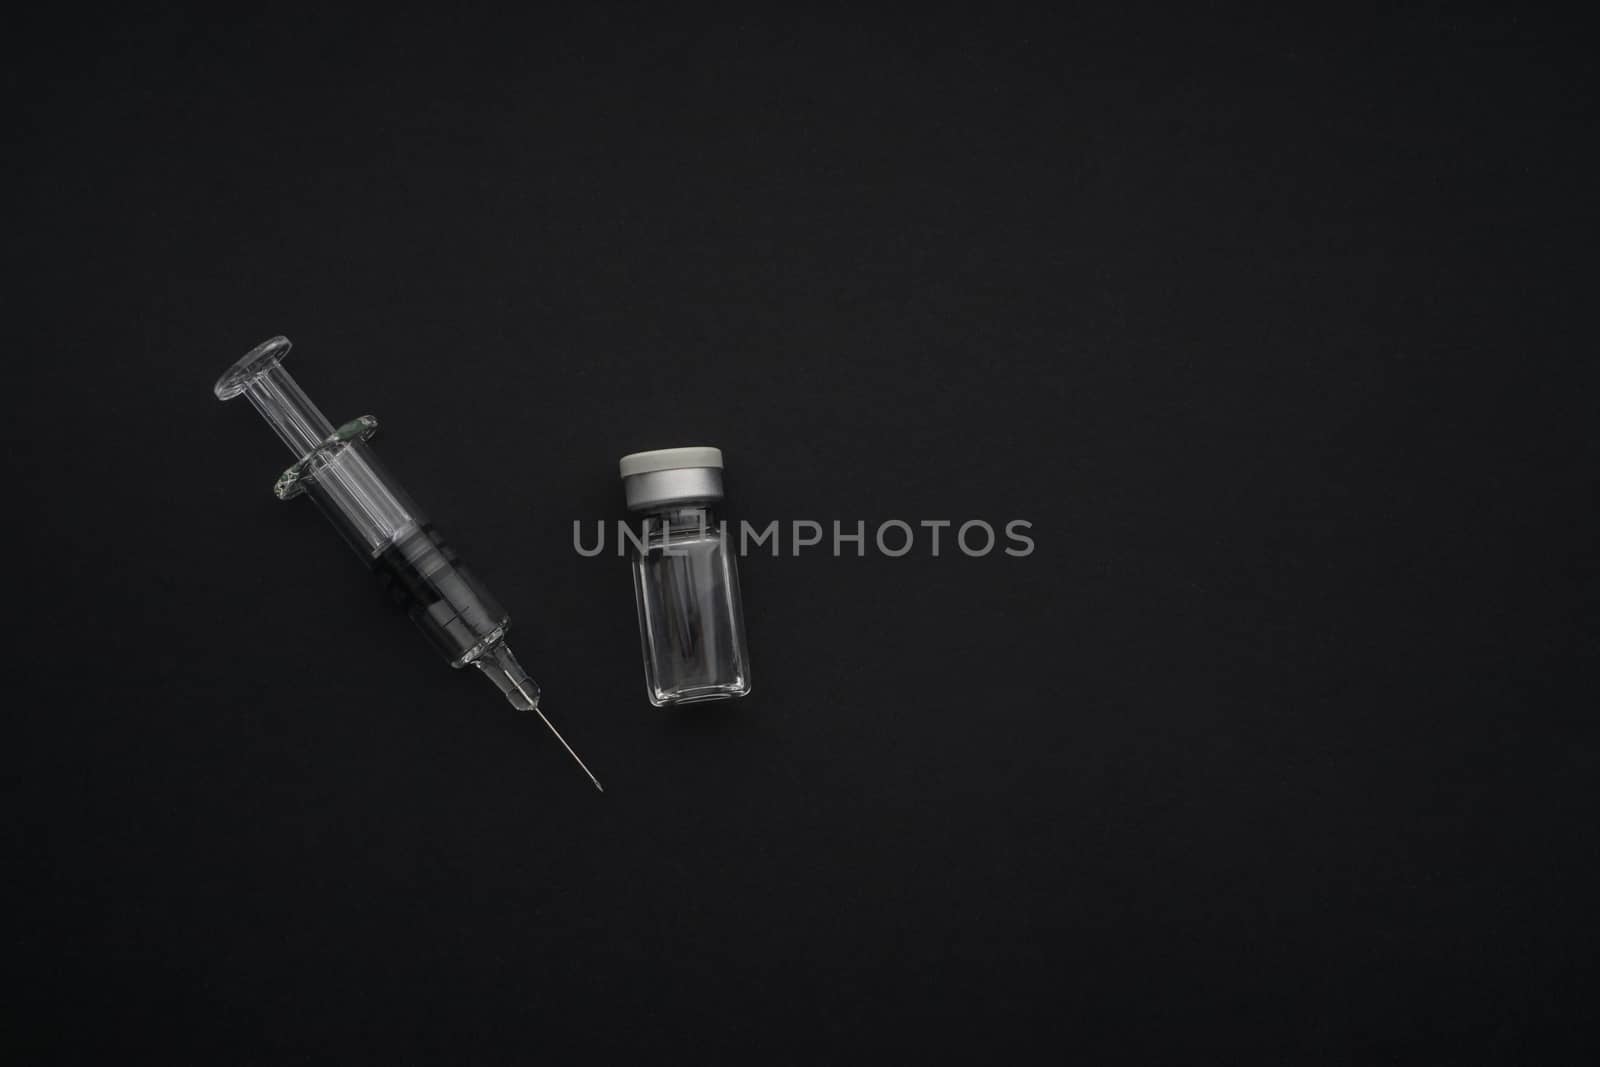 Closeup syringe and vials on black background. Healthcare dan Copy Space concept